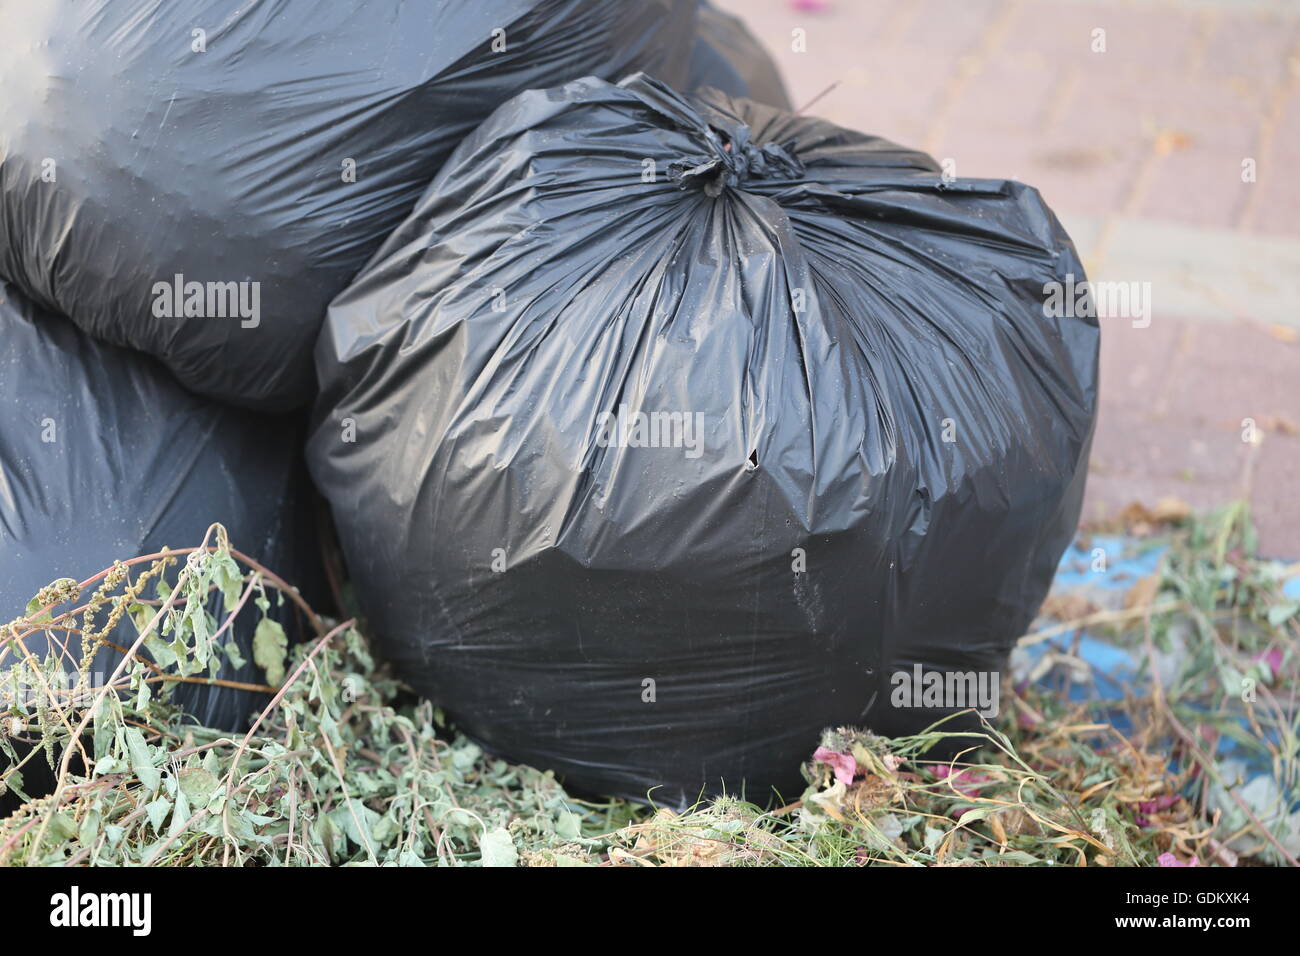 https://c8.alamy.com/comp/GDKXK4/pile-of-full-garbage-bags-pile-of-green-garbage-bags-tied-up-tightly-GDKXK4.jpg